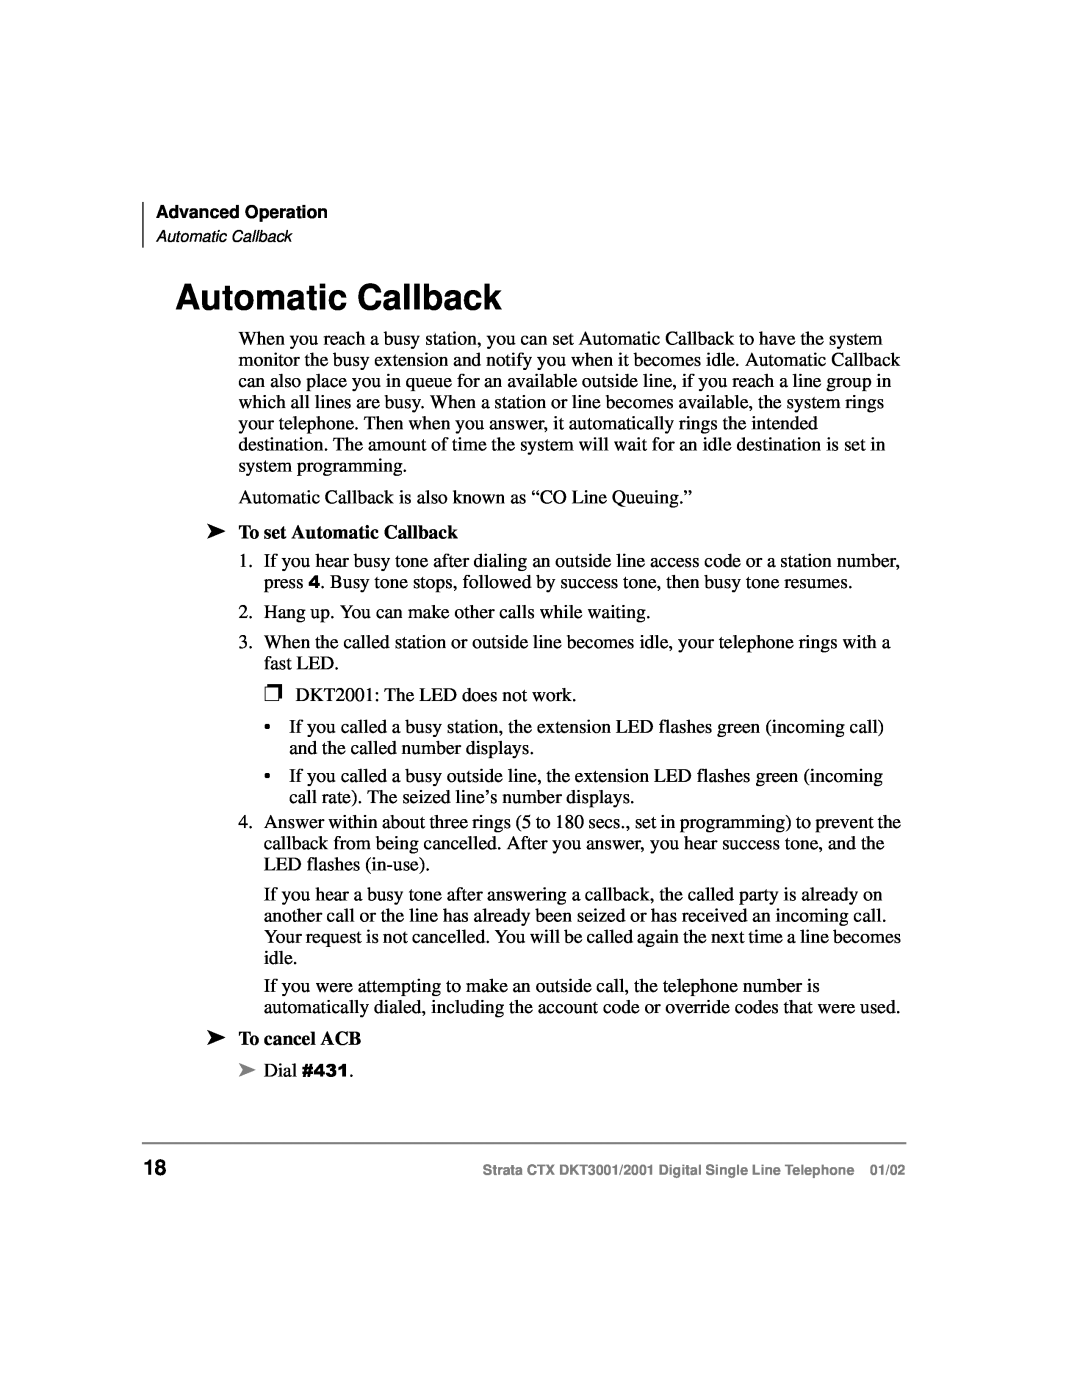 Toshiba DXT3001, 2001 manual To set Automatic Callback, To cancel ACB 